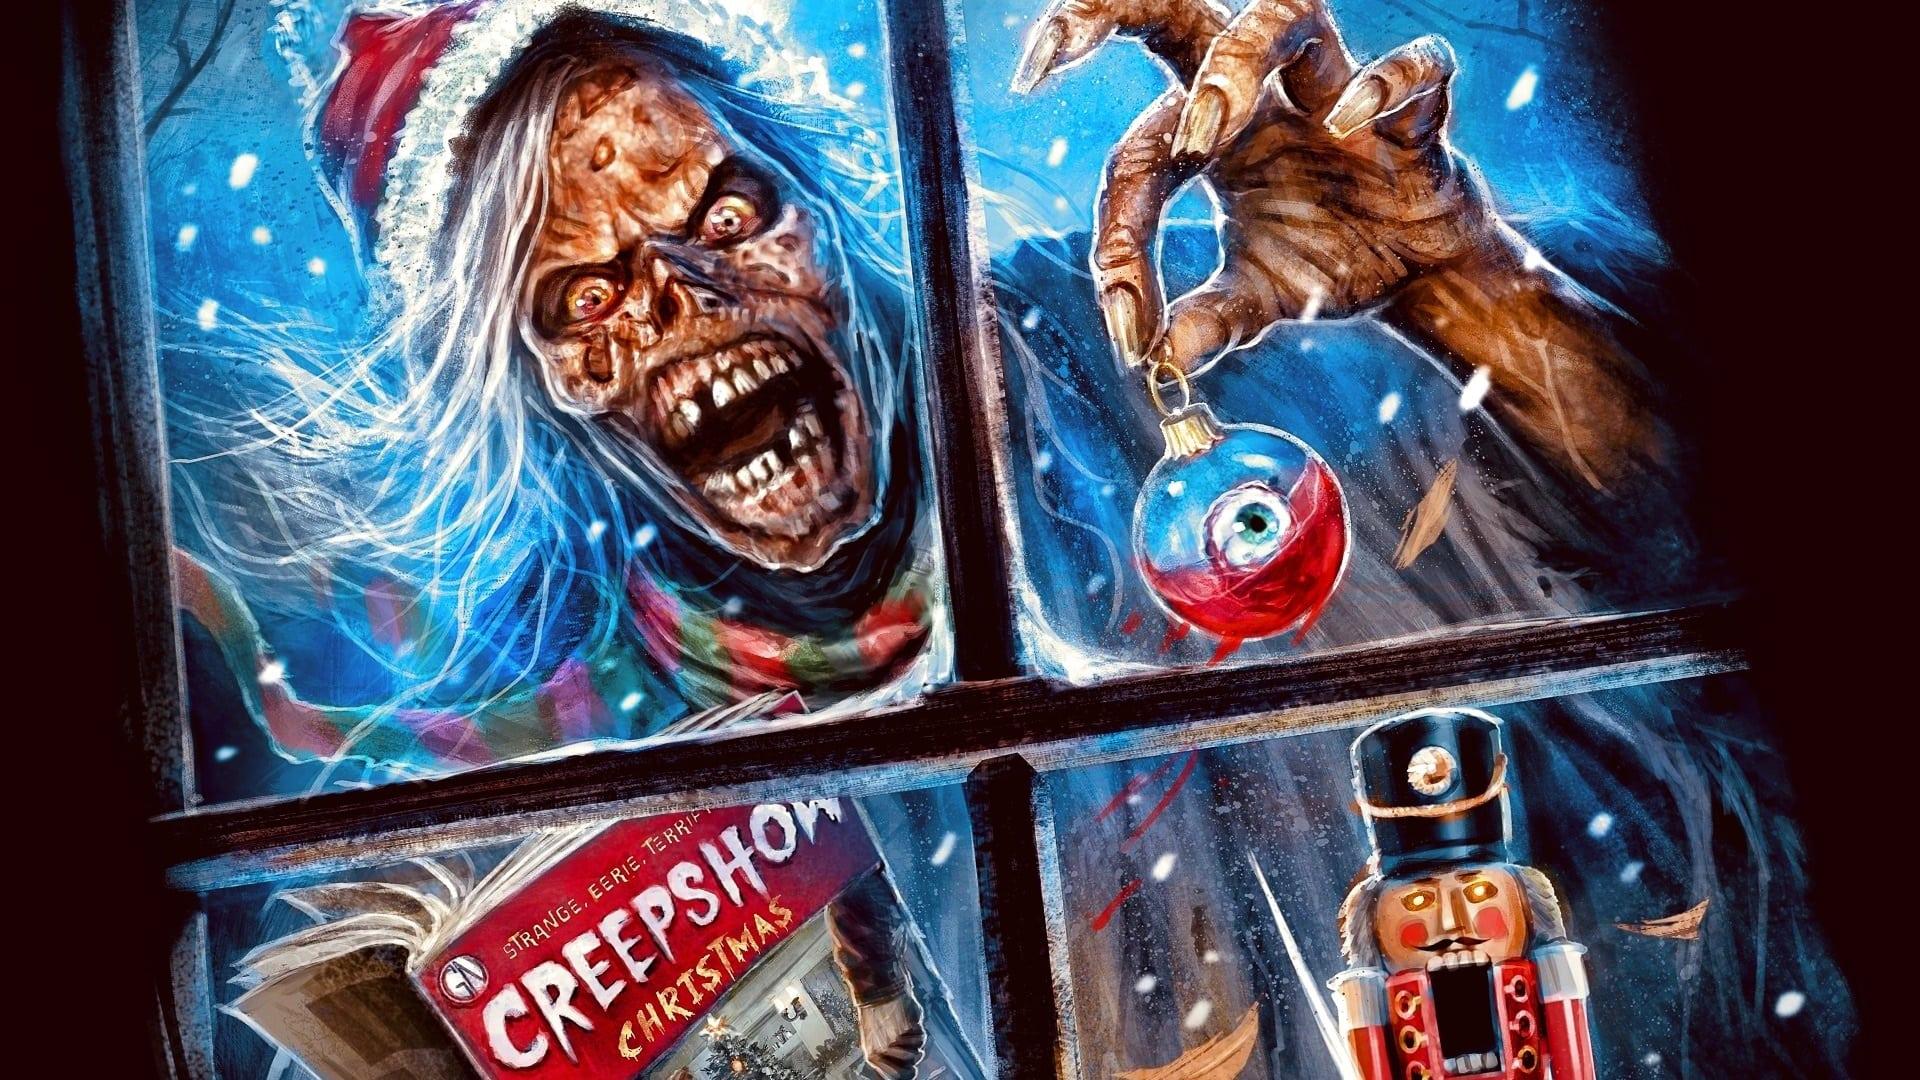 A Creepshow Holiday Special backdrop